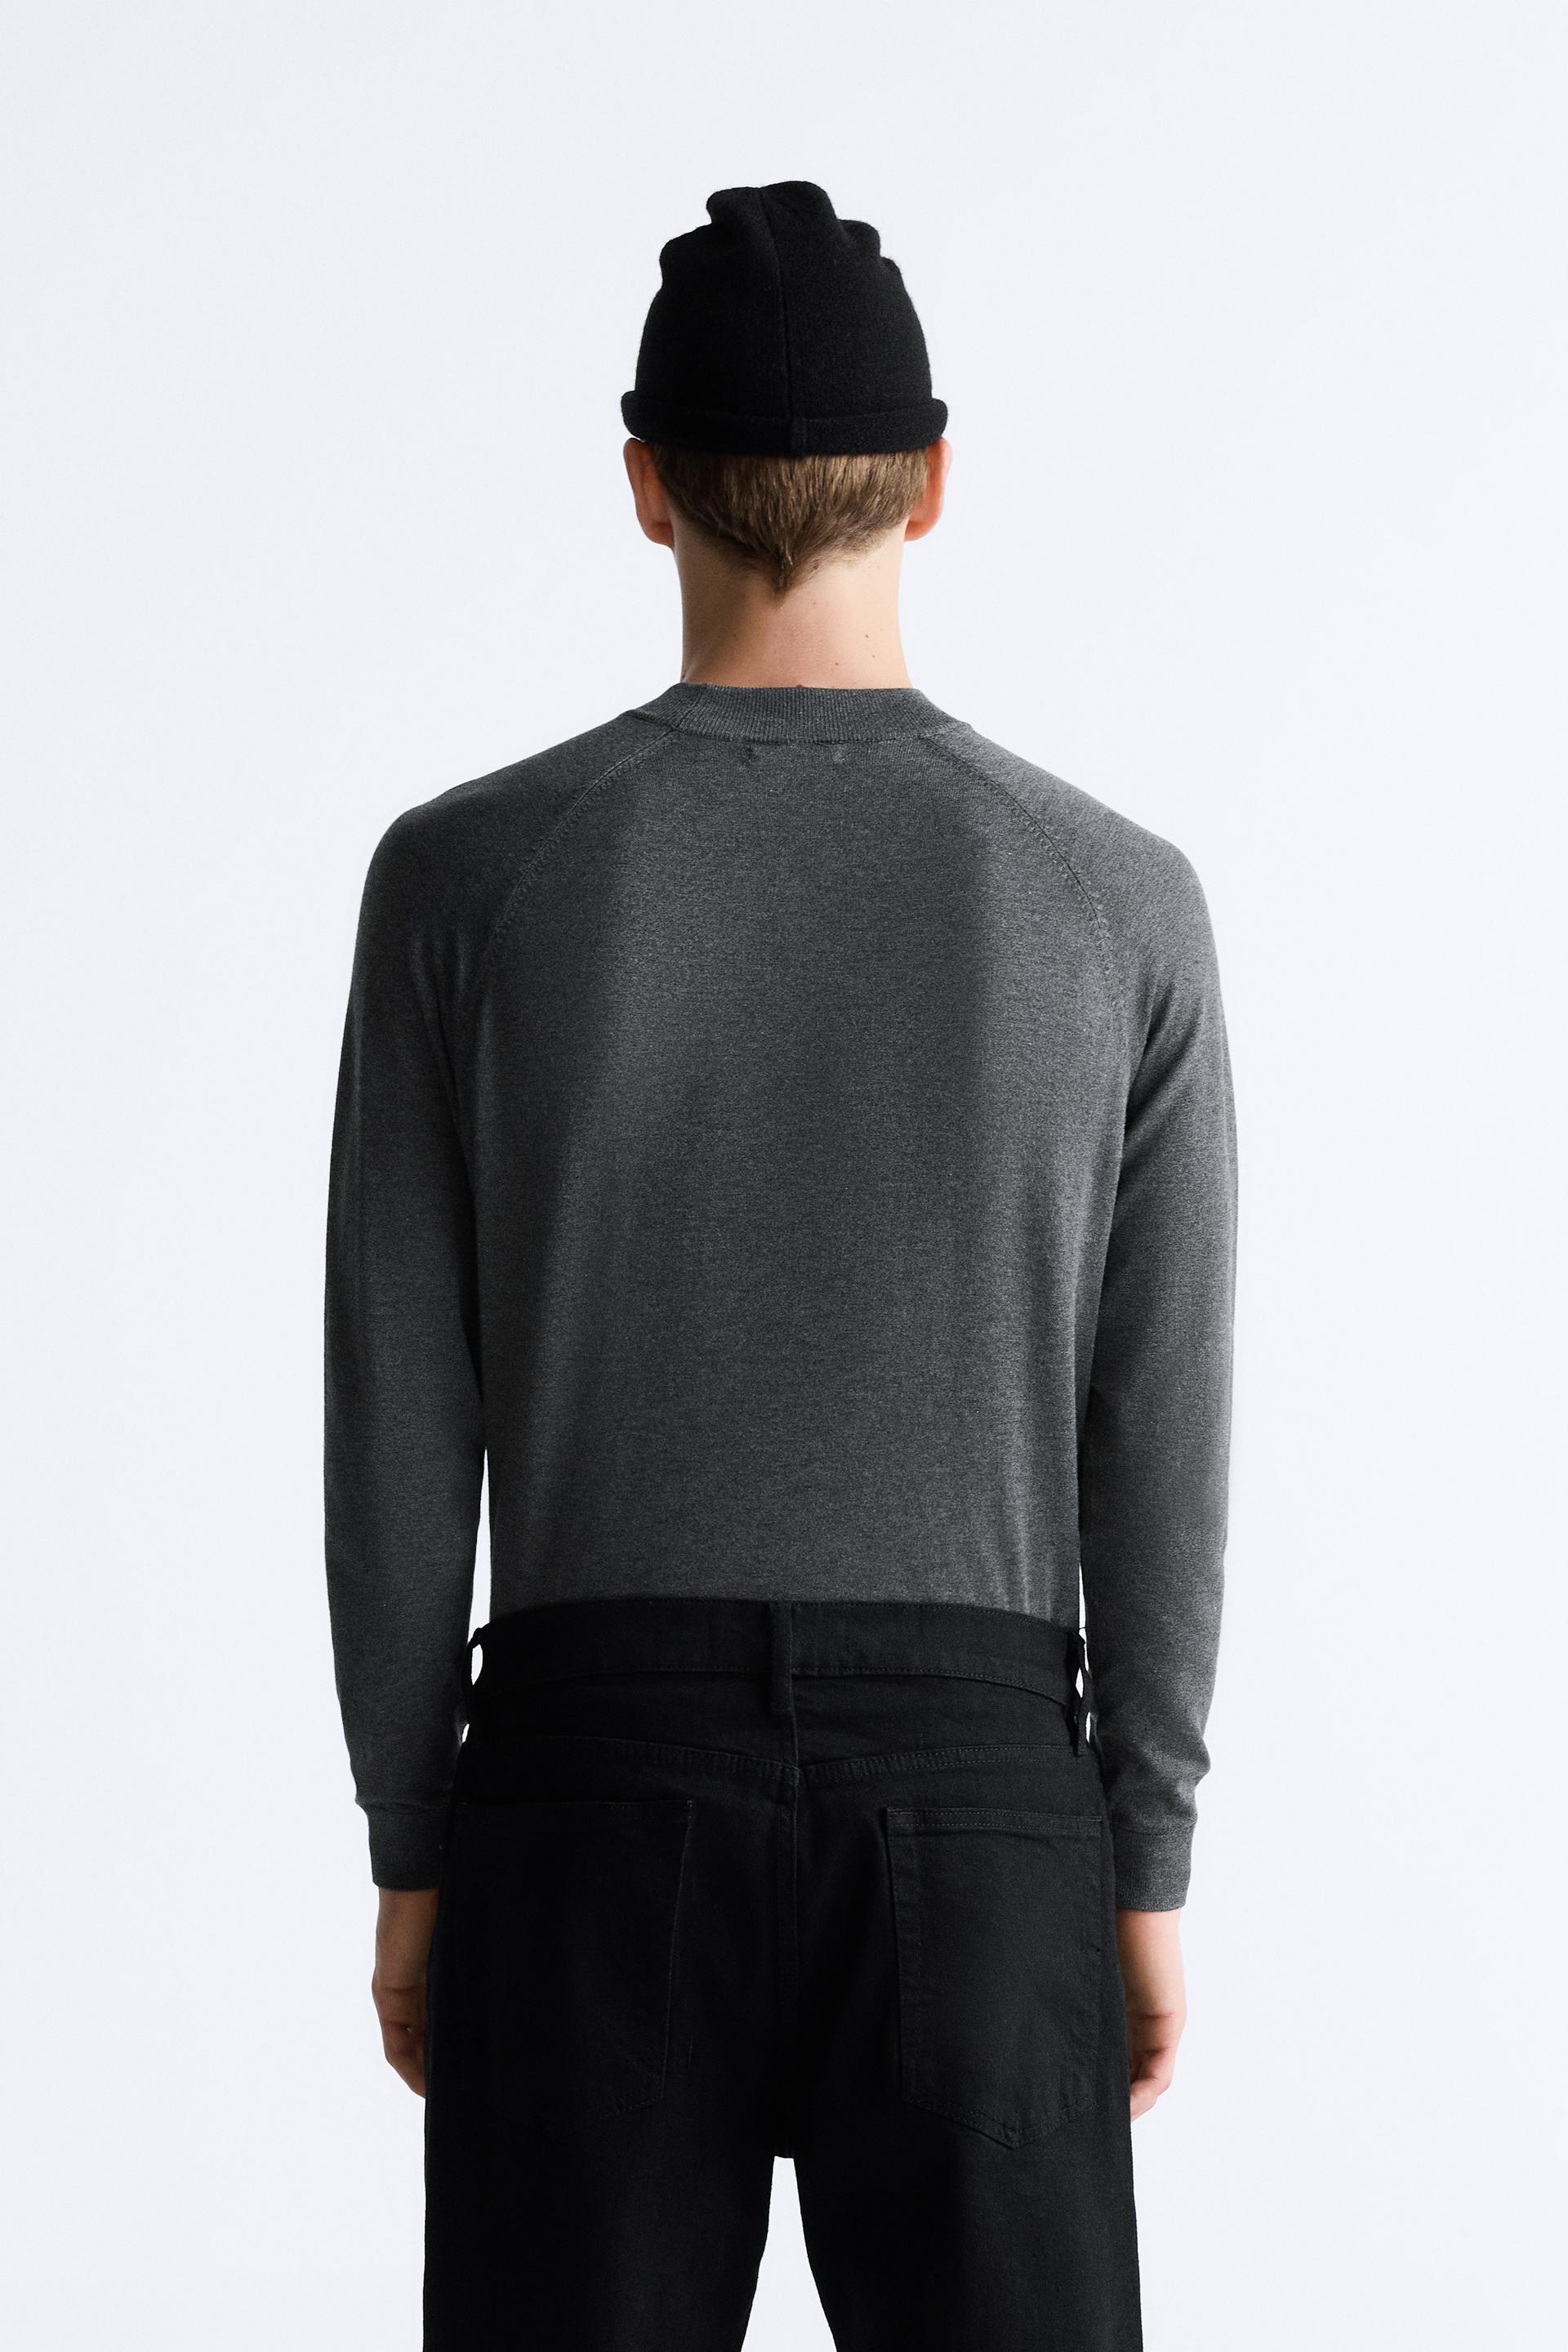 ZARA 'Ribbed Knit Mock Neck' Men's Designer Long Sleeve Sweater S Khaki  **NWT**